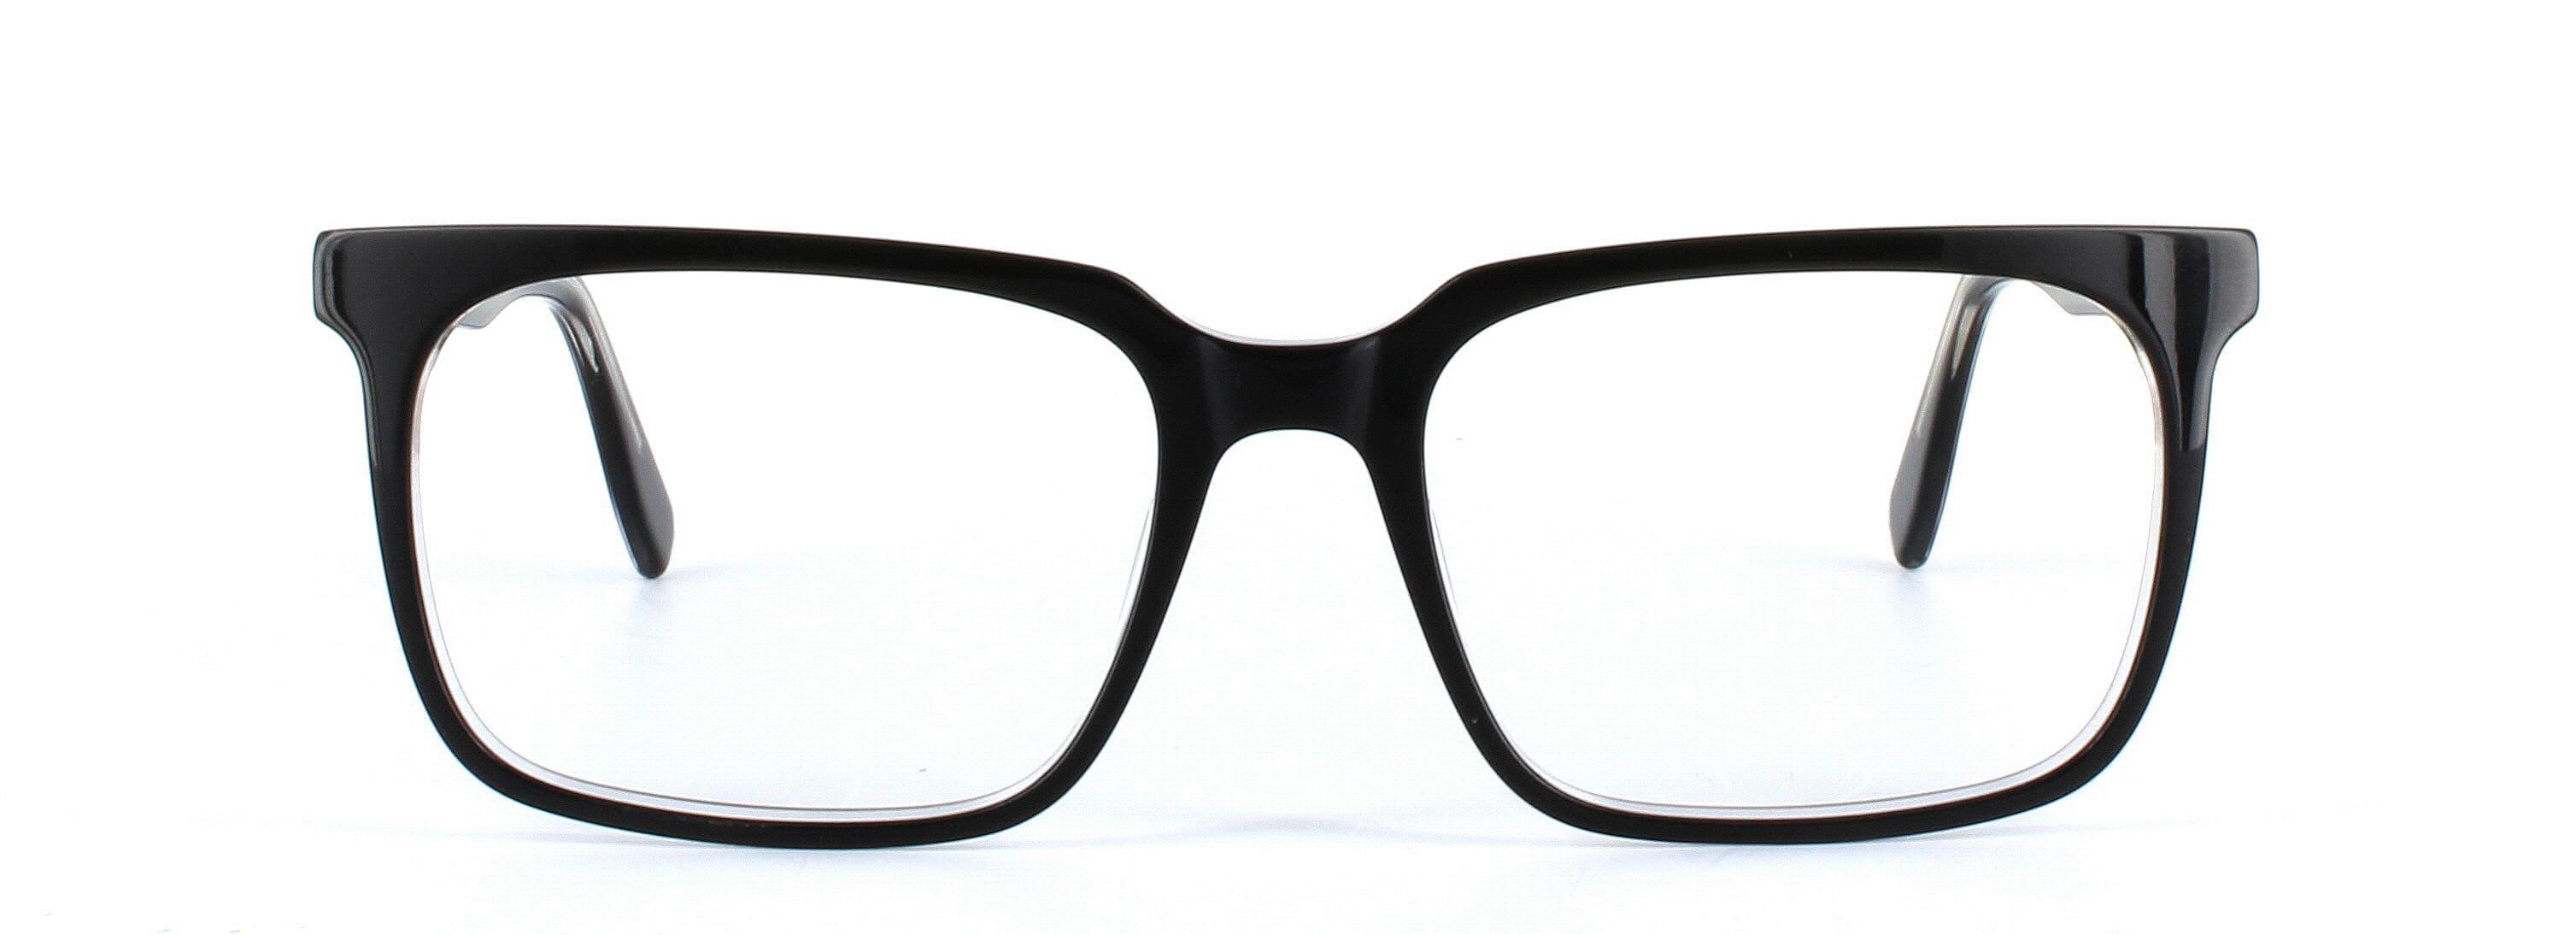 Coombe Black Full Rim Rectangular Acetate Glasses - Image View 5